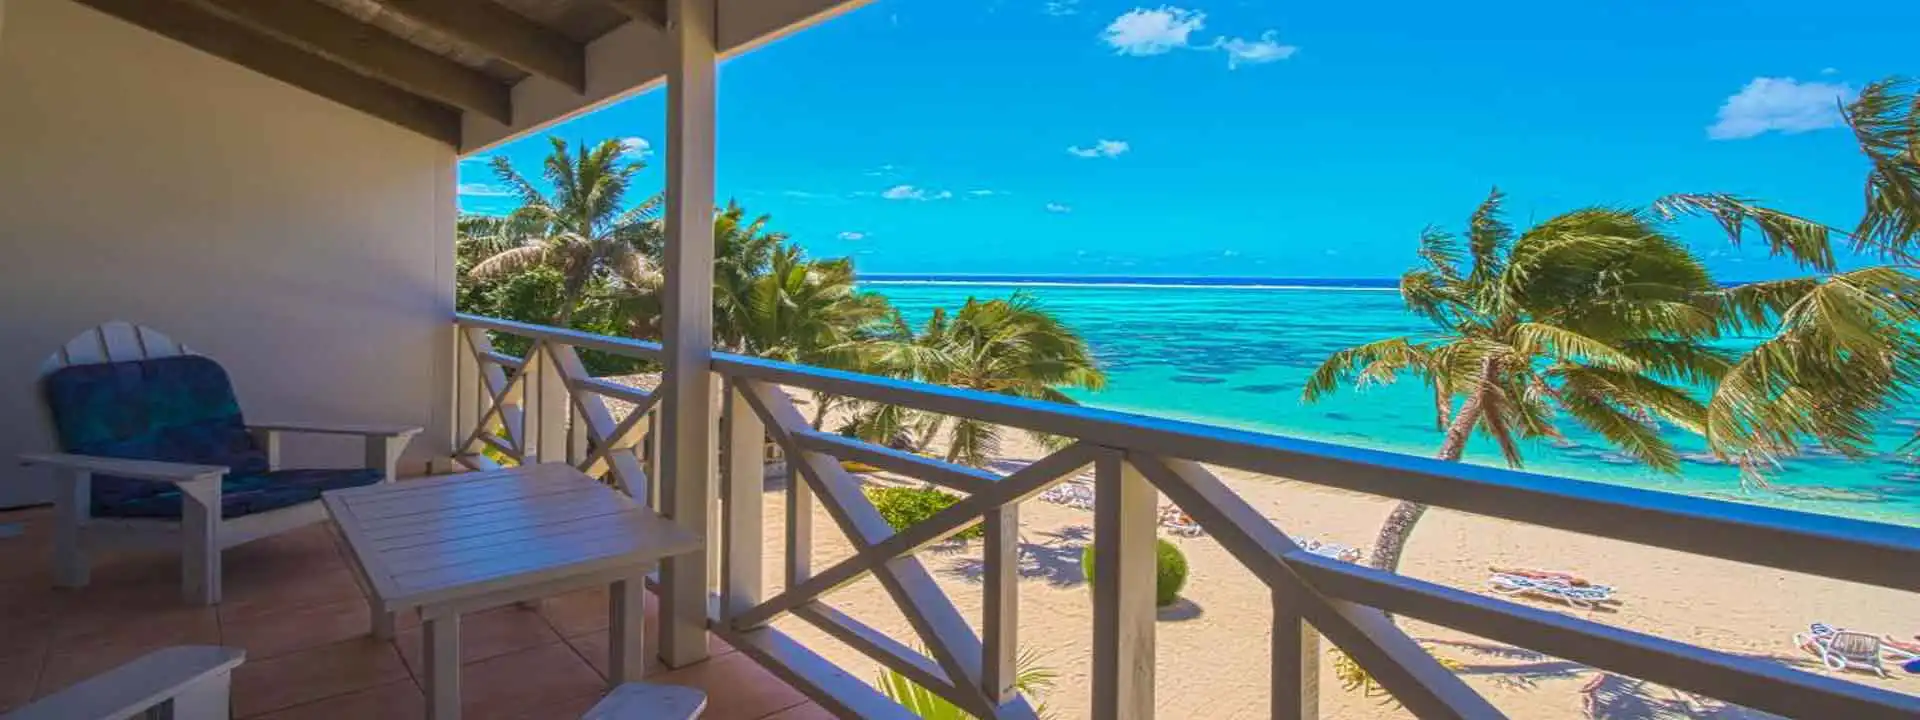 MOANA-SANDS-BEACH-FRONT-HOTEL-Cook-Islands-balcony-view-ocean